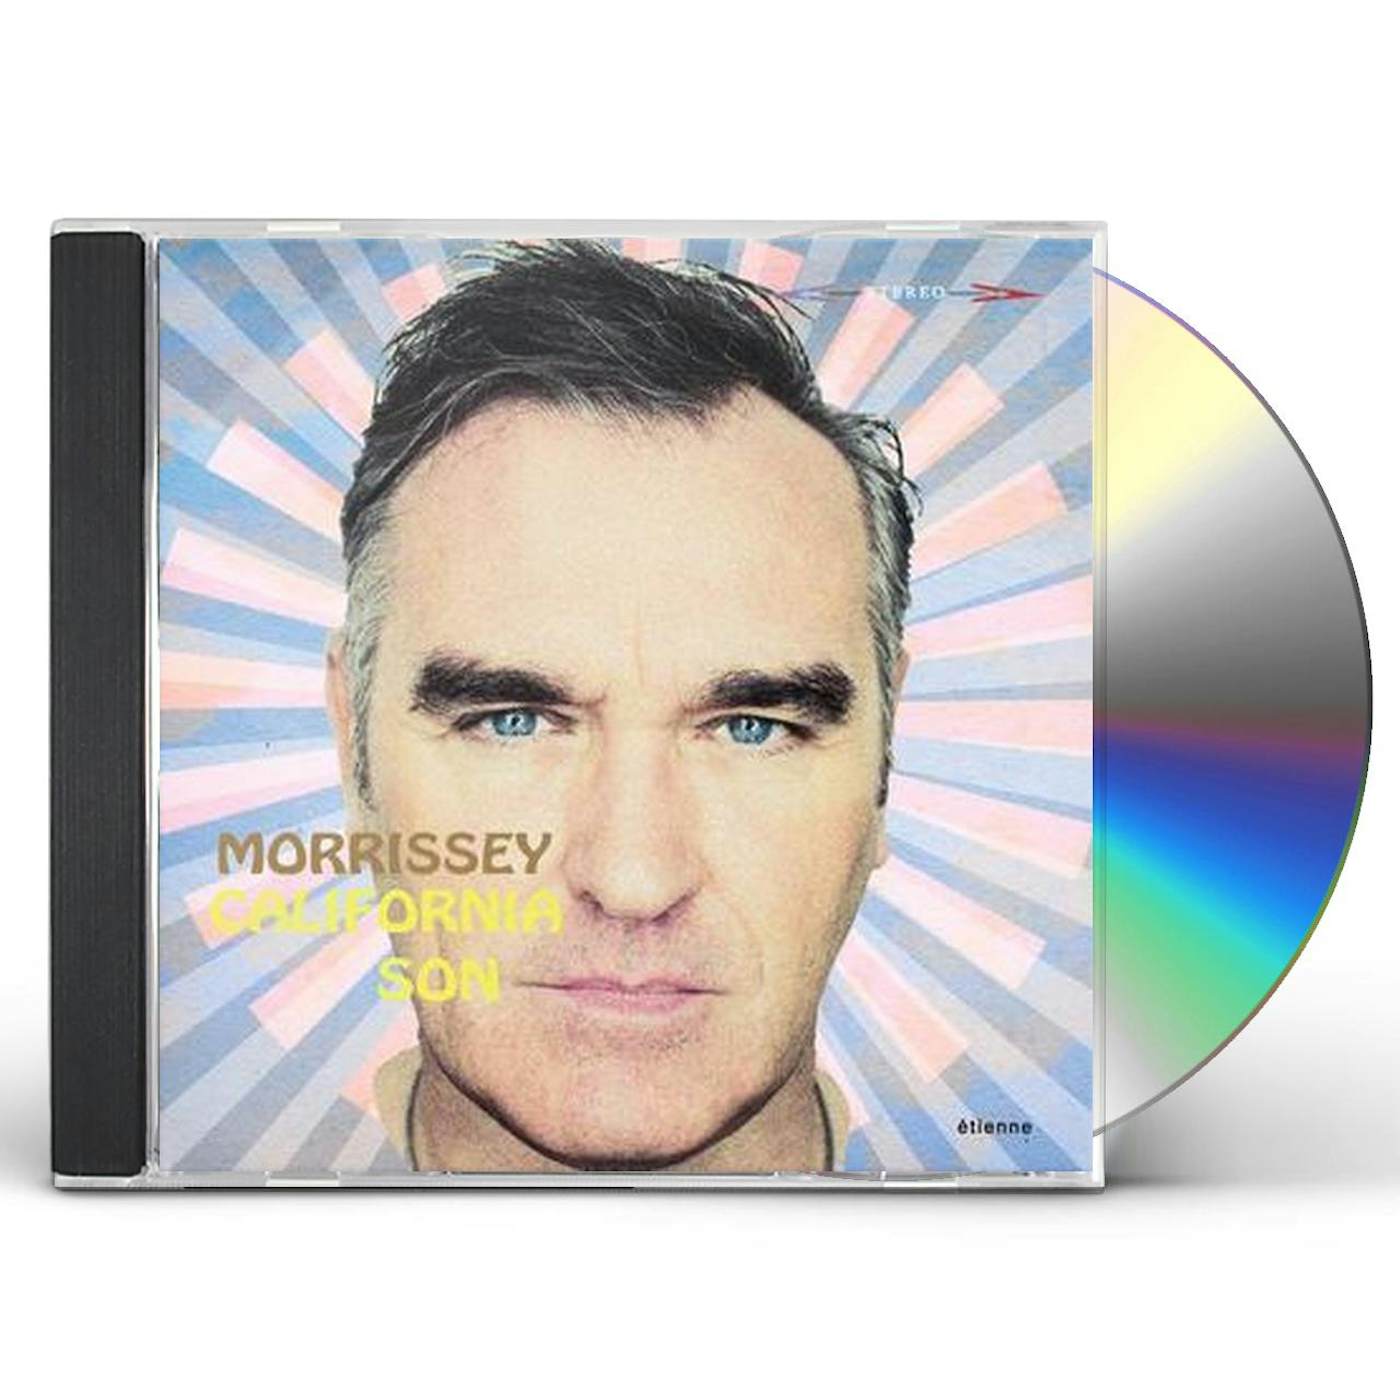 Morrissey CALIFORNIA SON CD